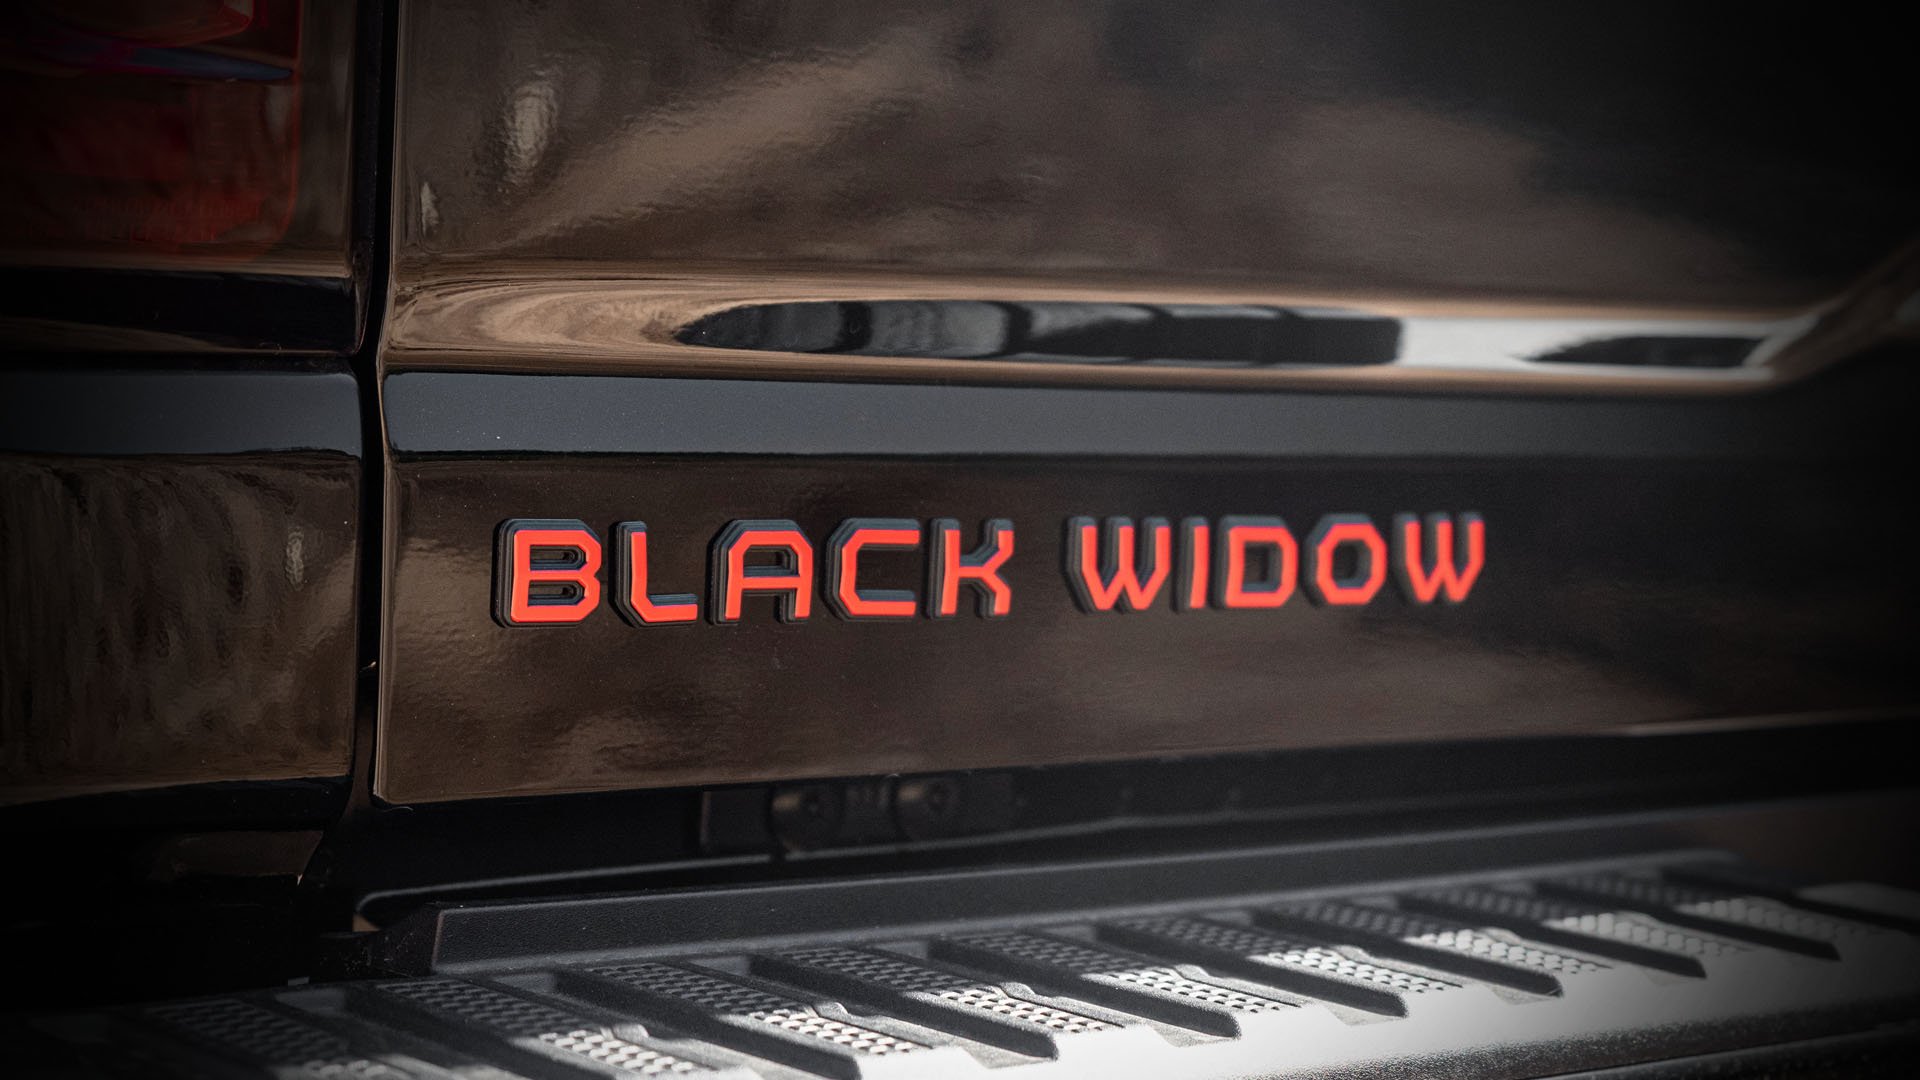 Black Widow badging